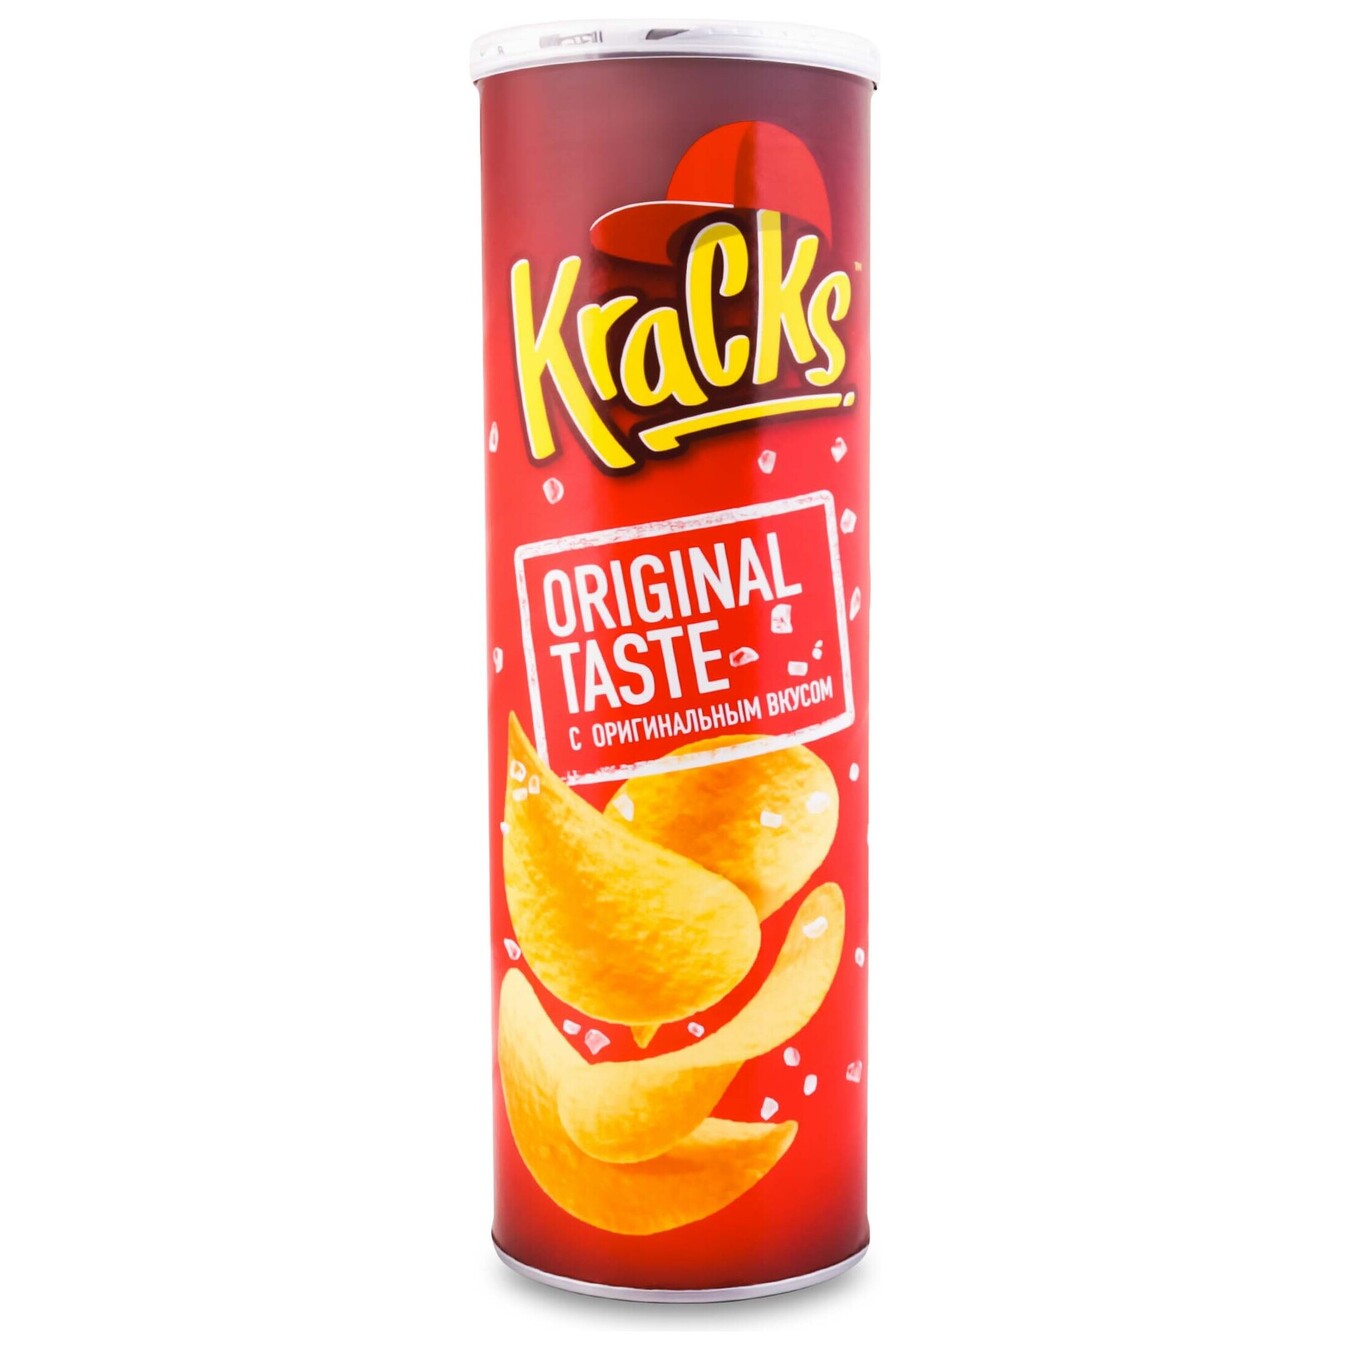 Kracks potato chips with original taste 160g